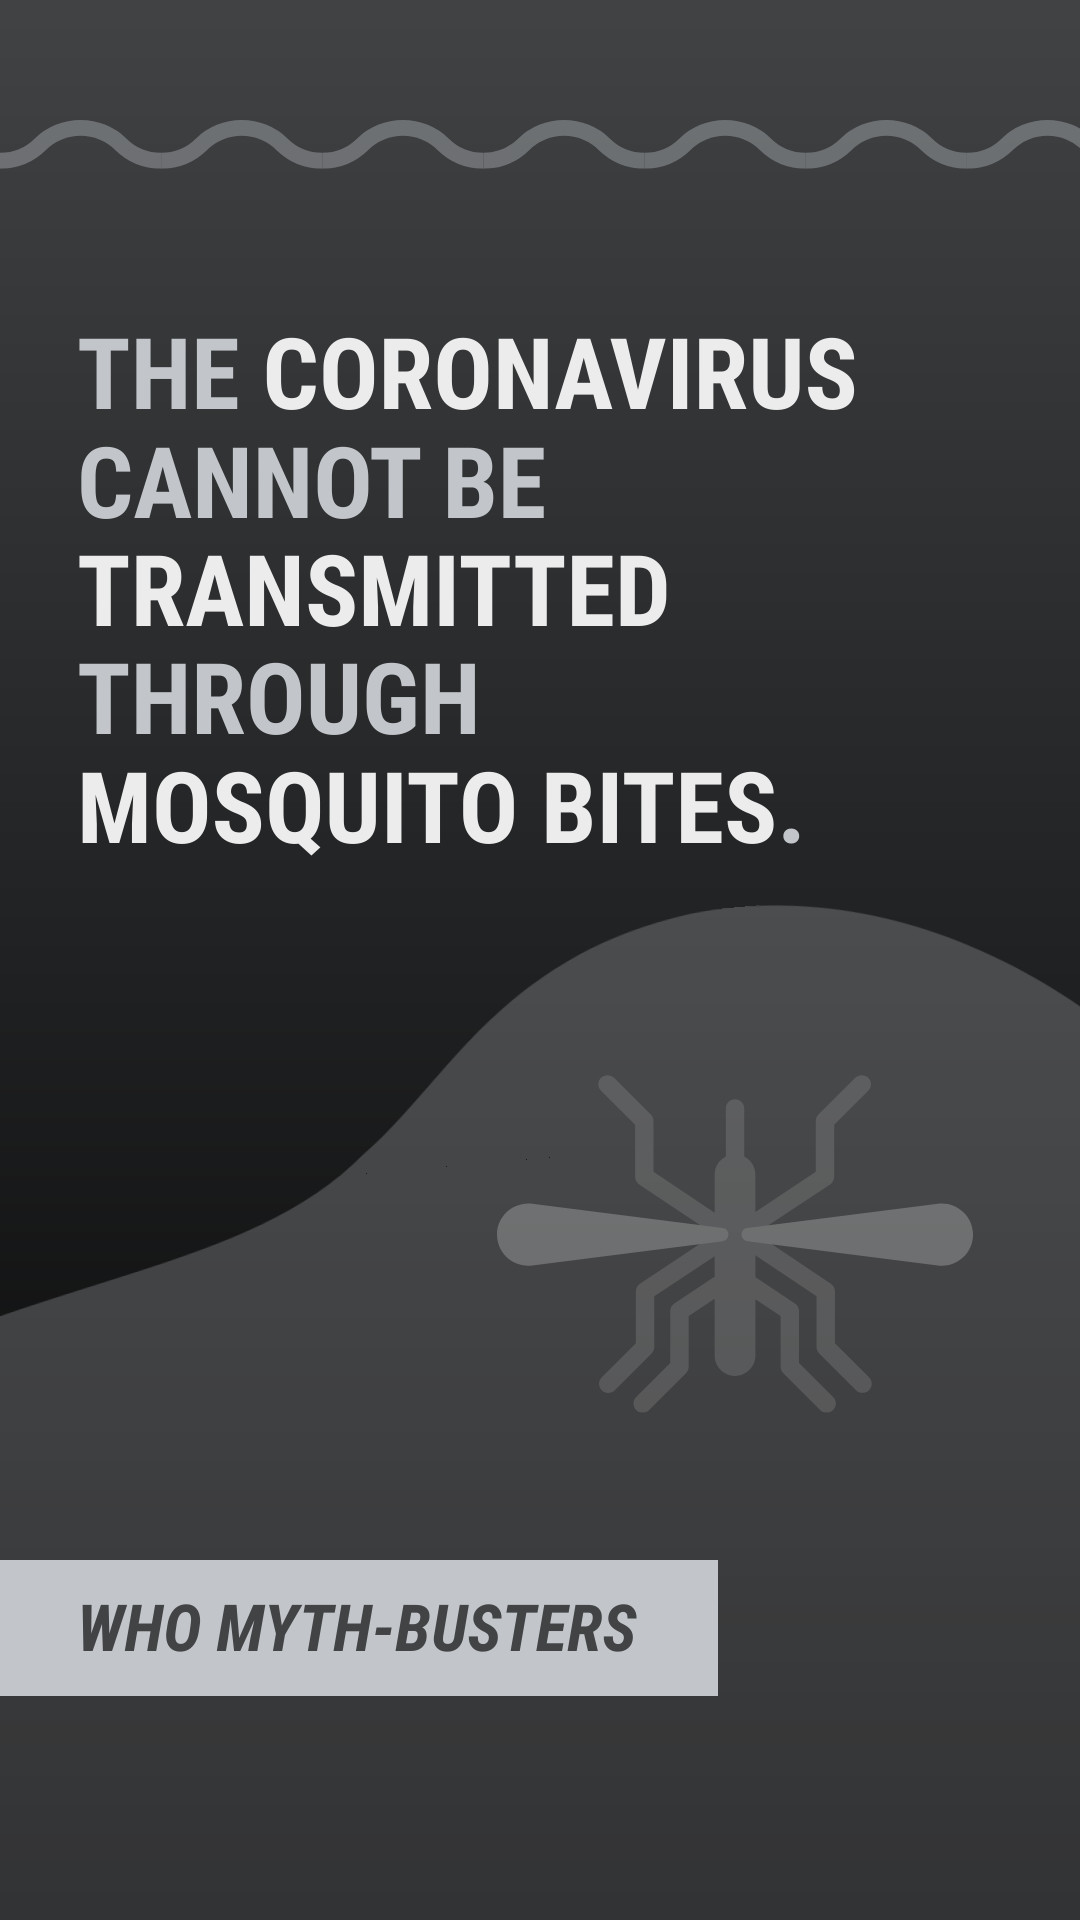 Myth COVID-19 Mosquito Bites